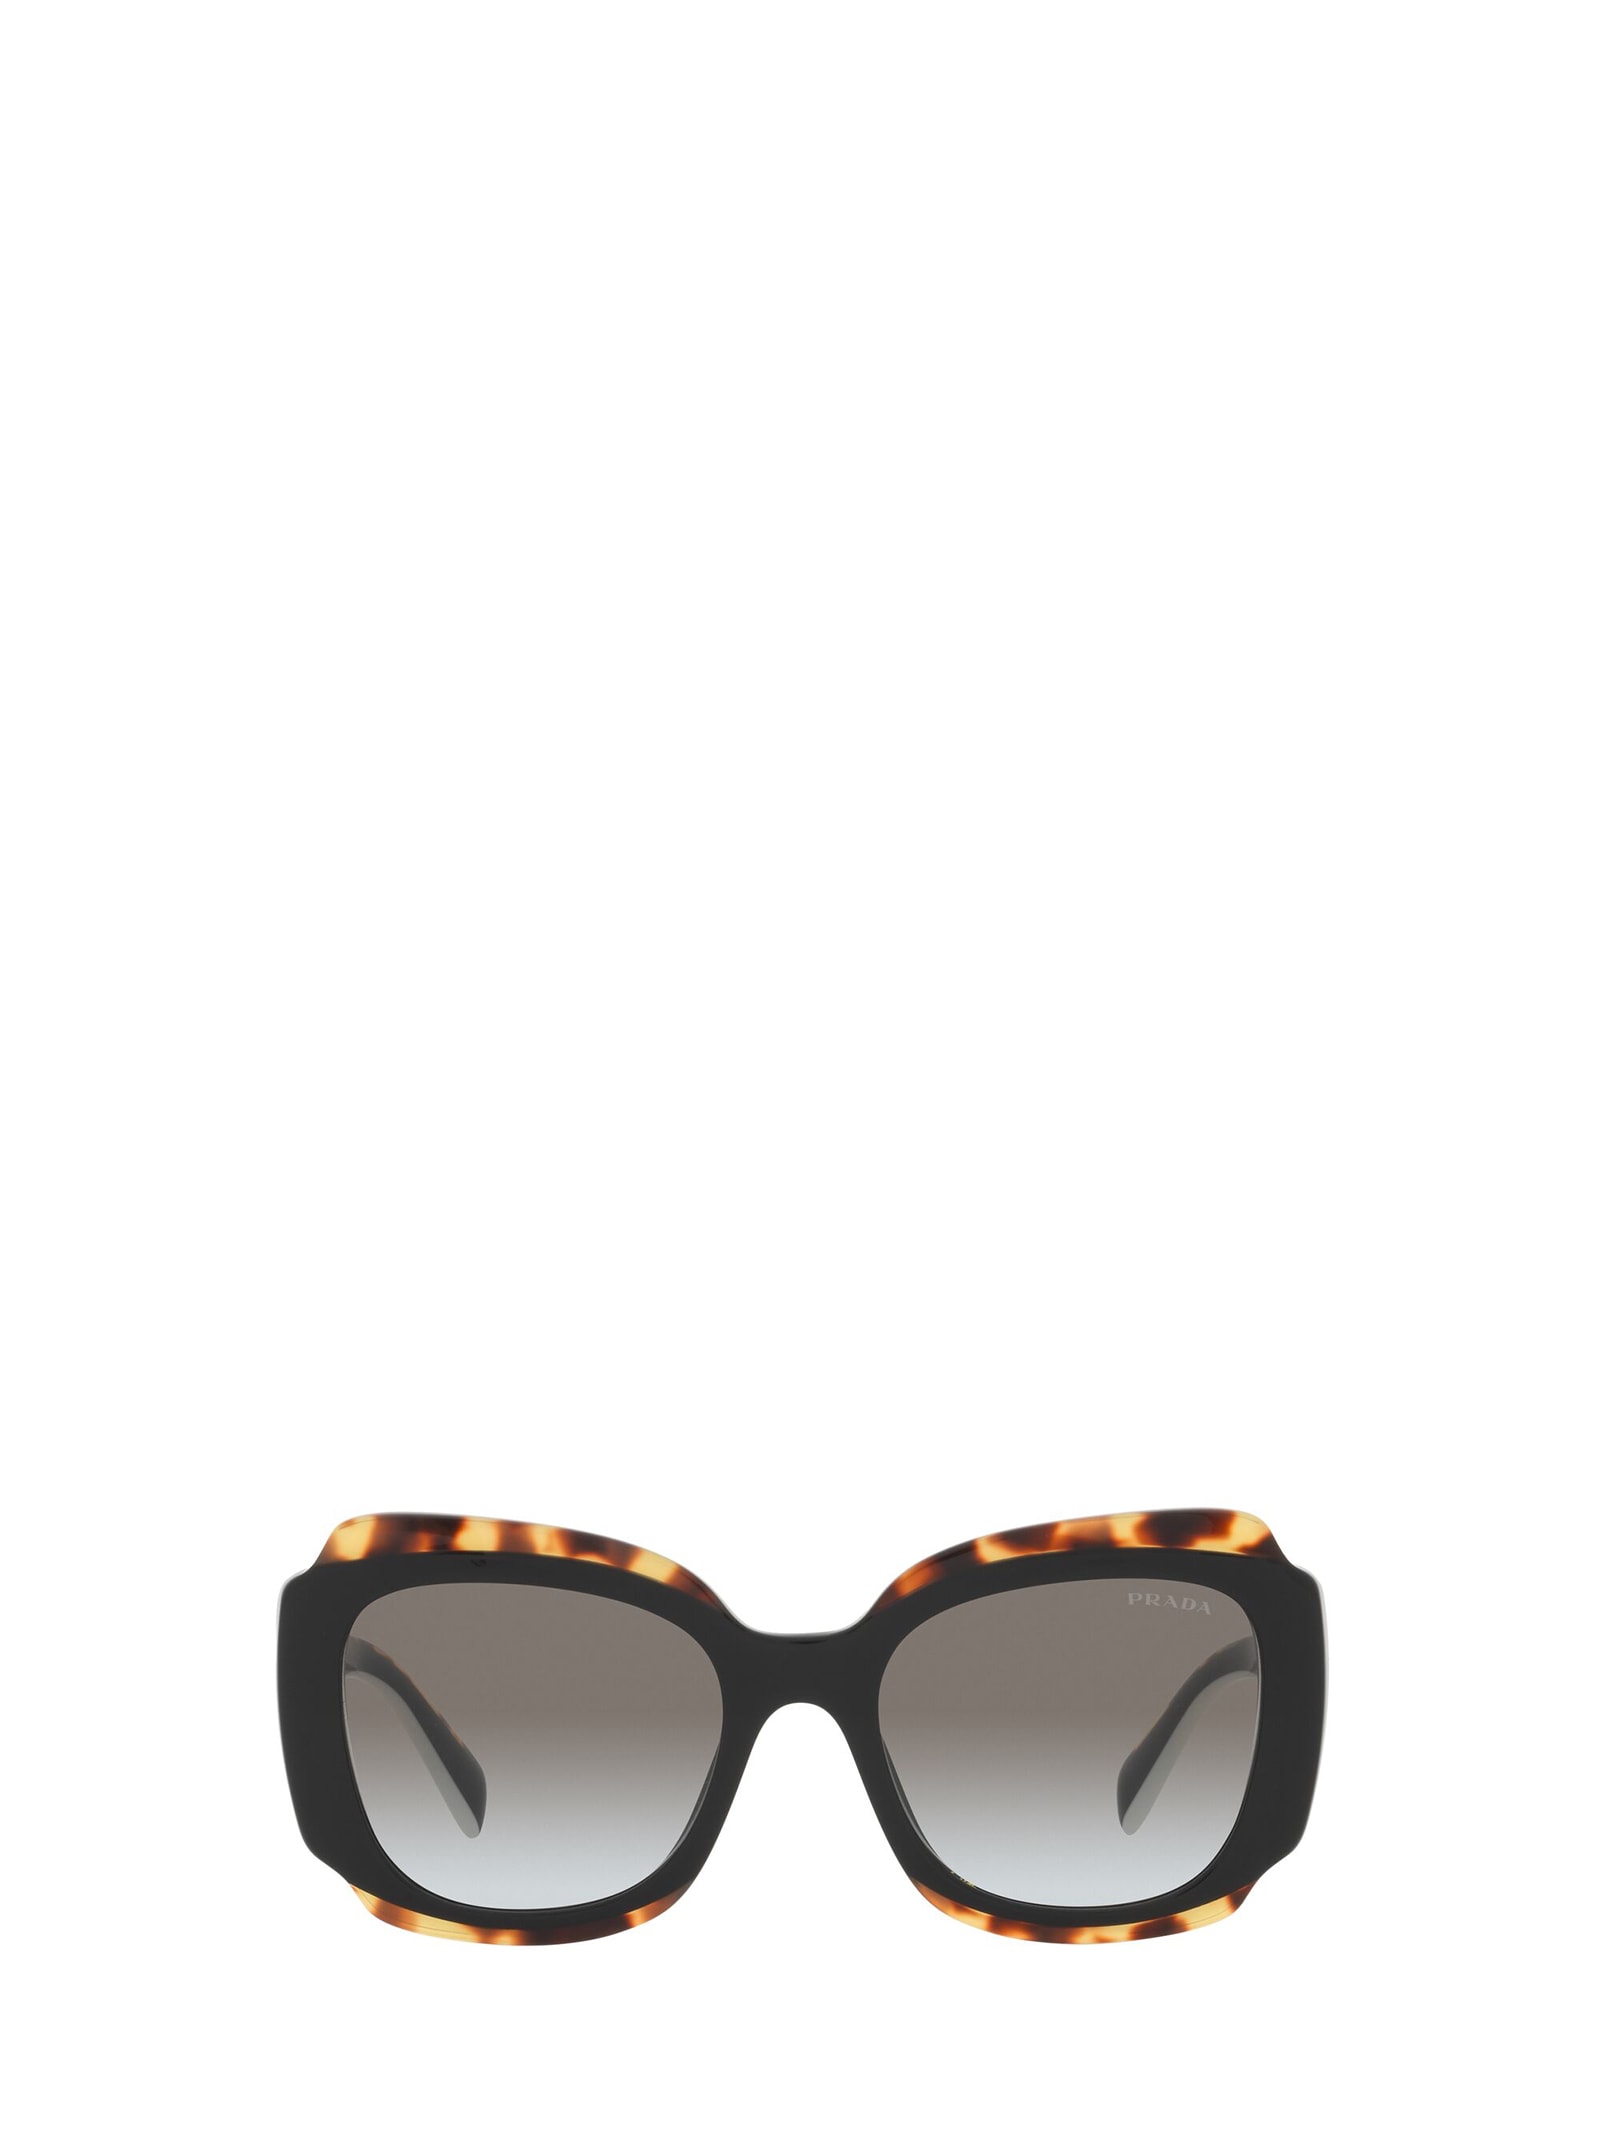 Prada Eyewear Pr 16ys Black / Havana Sunglasses